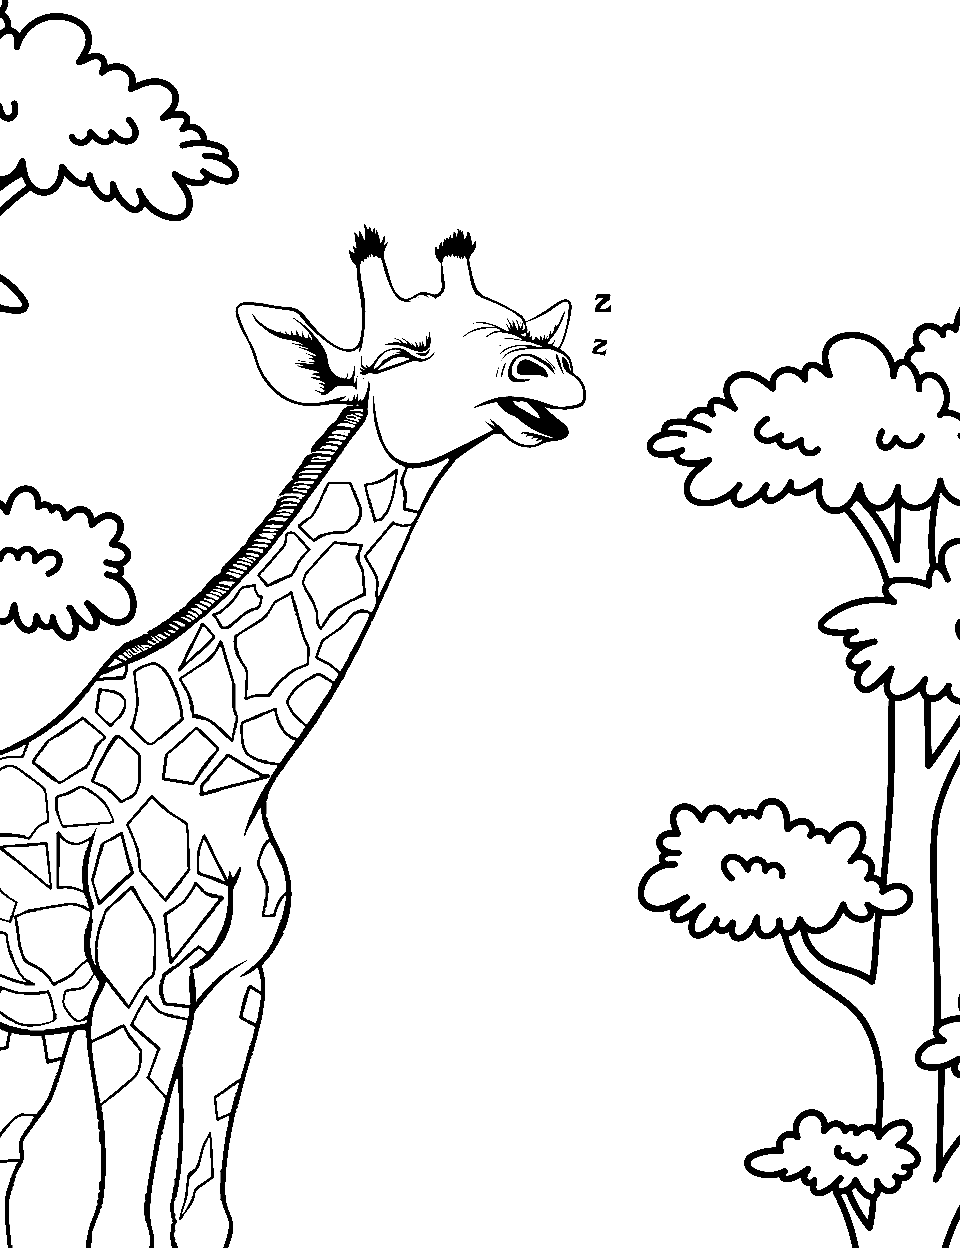 Sleepy Giraffe Coloring Page - A giraffe yawning and ready to snooze.